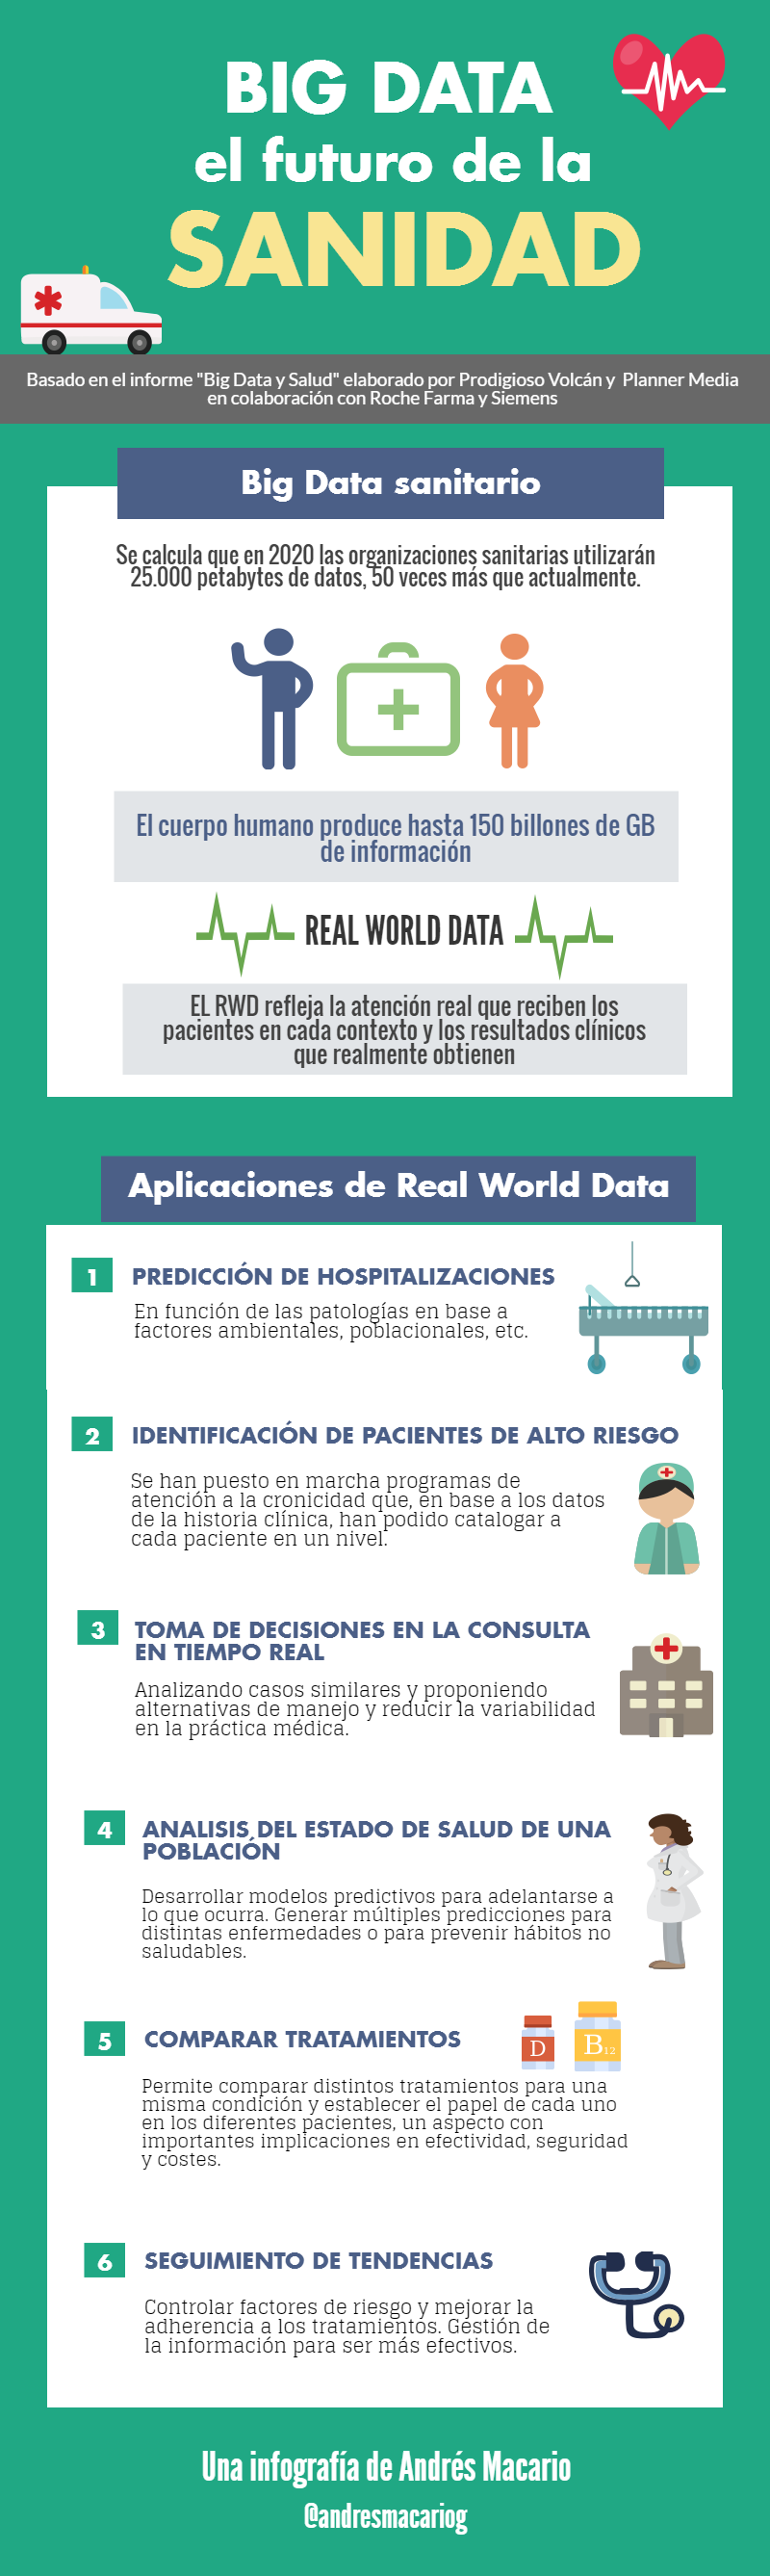 Big Data futuro de la sanidad- Infografia Andres Macario